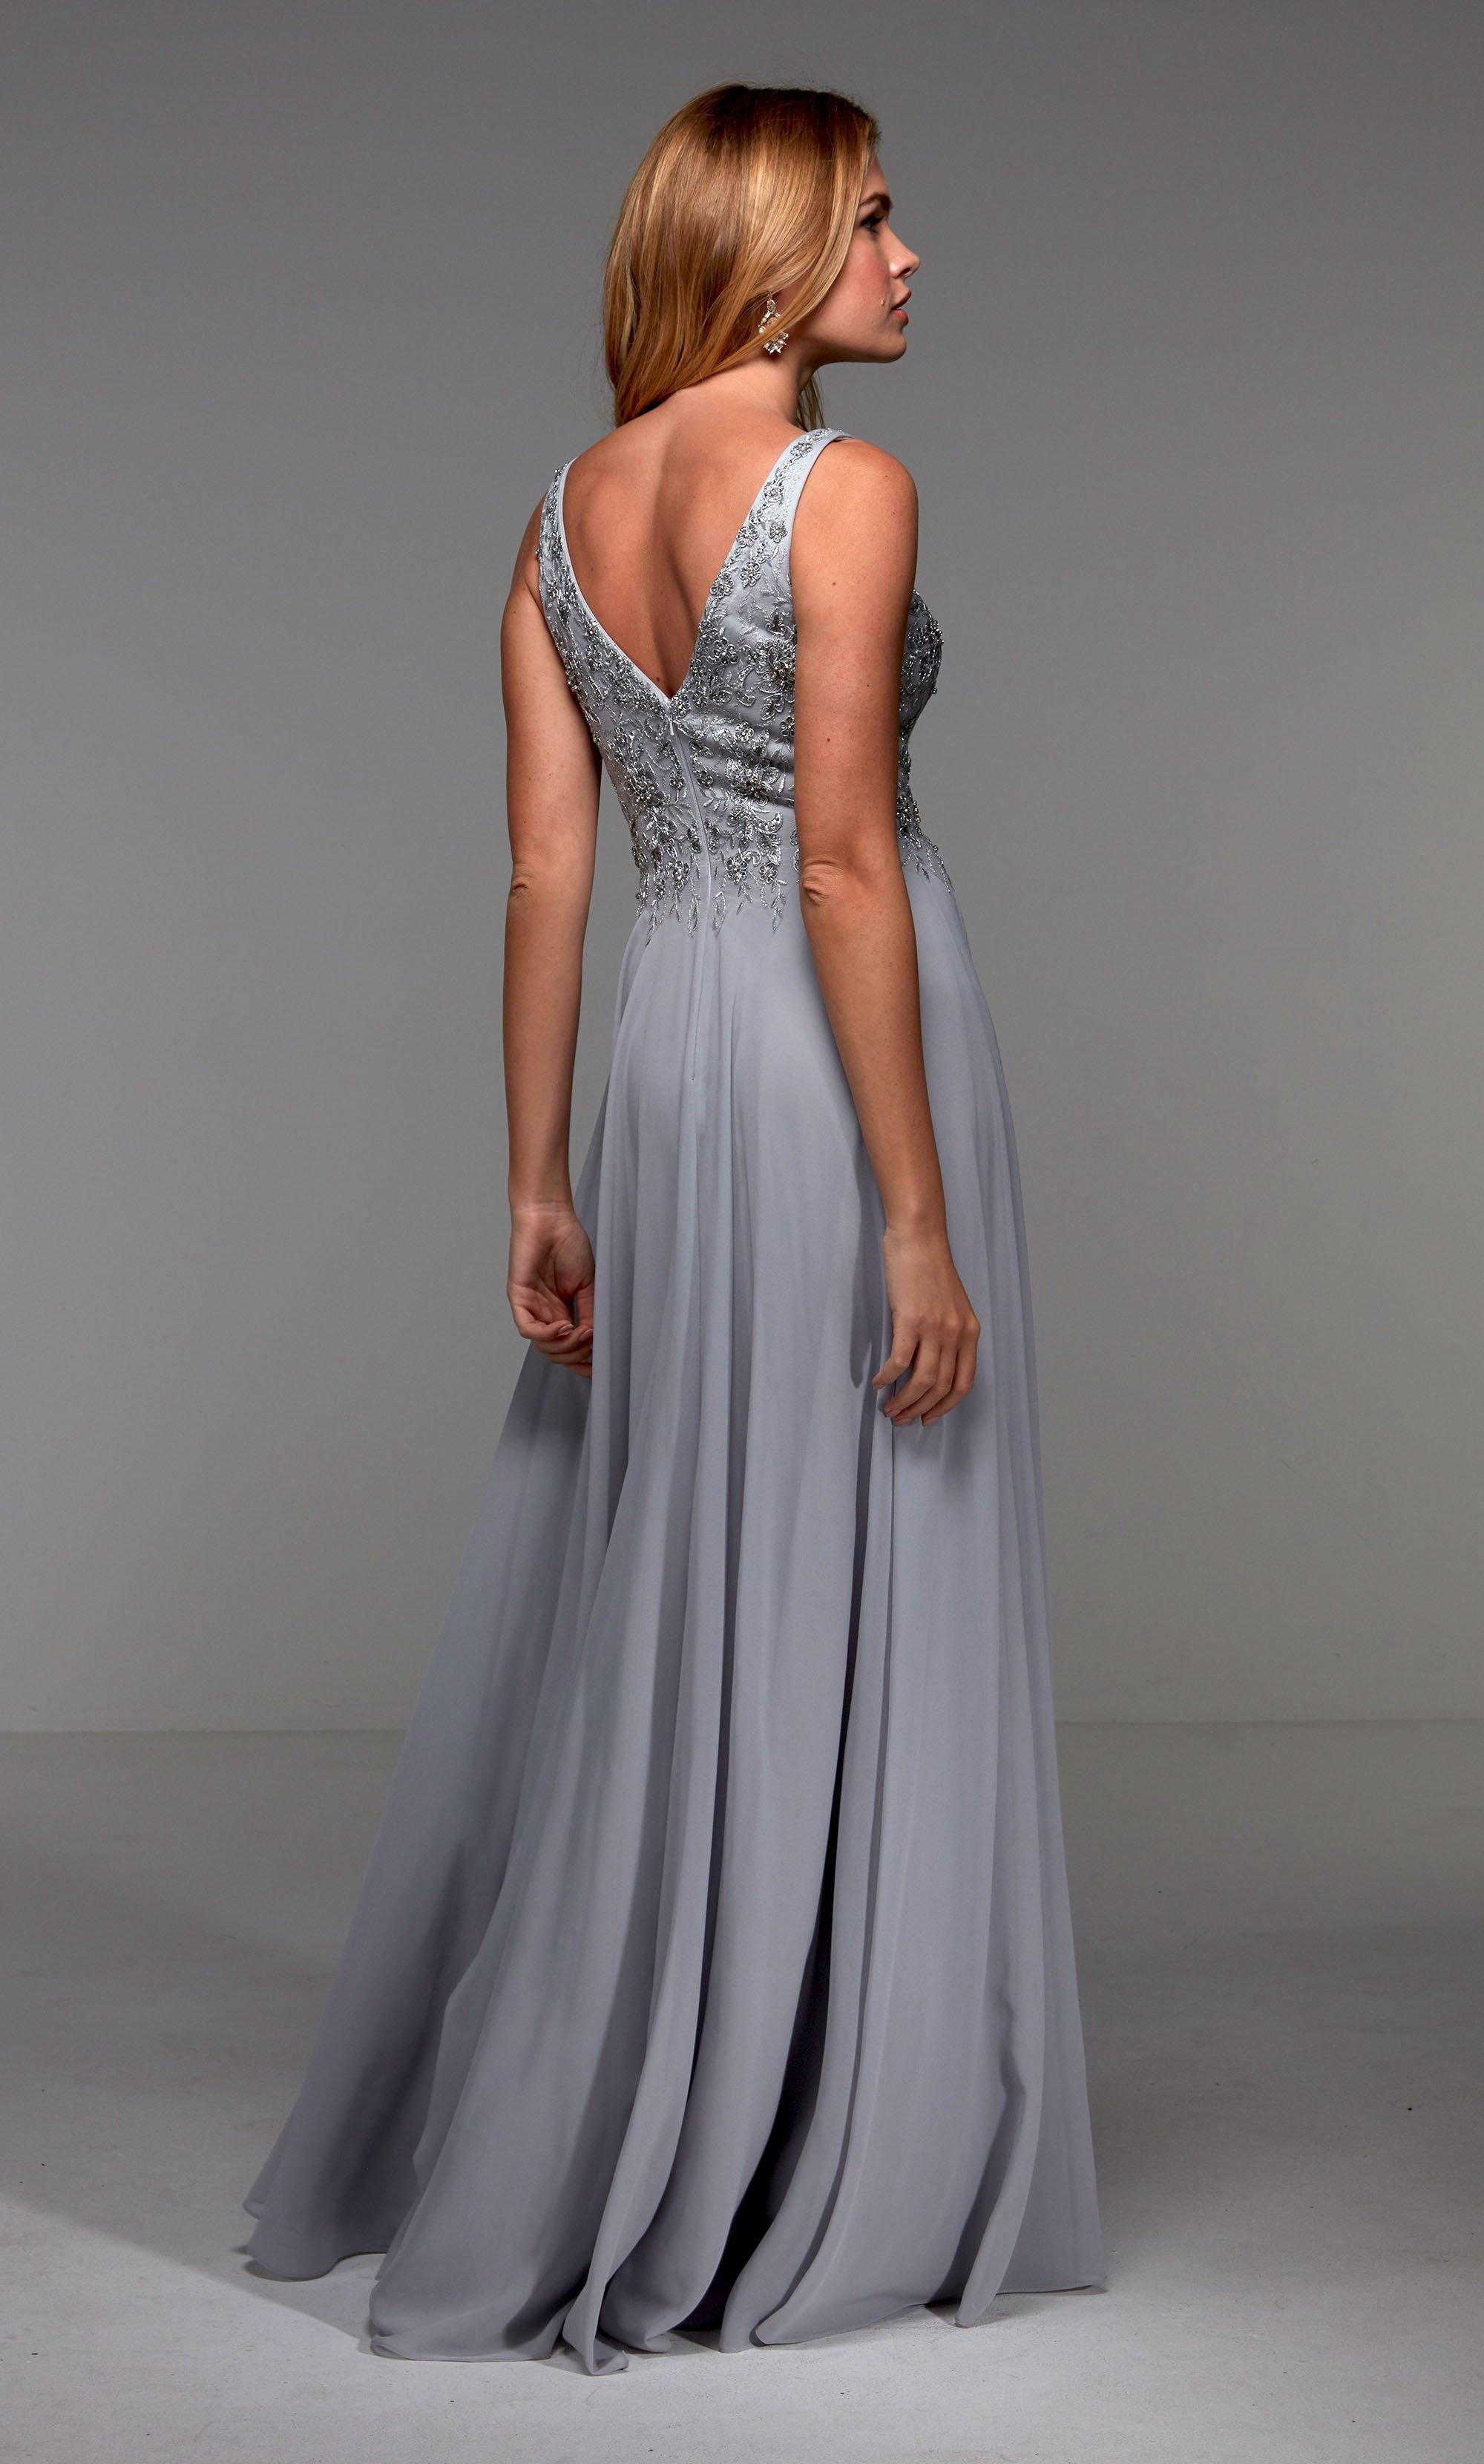 Formal Dress: 27473. Long Evening Dress, Sweetheart Neckline, Flowy Alyce Paris